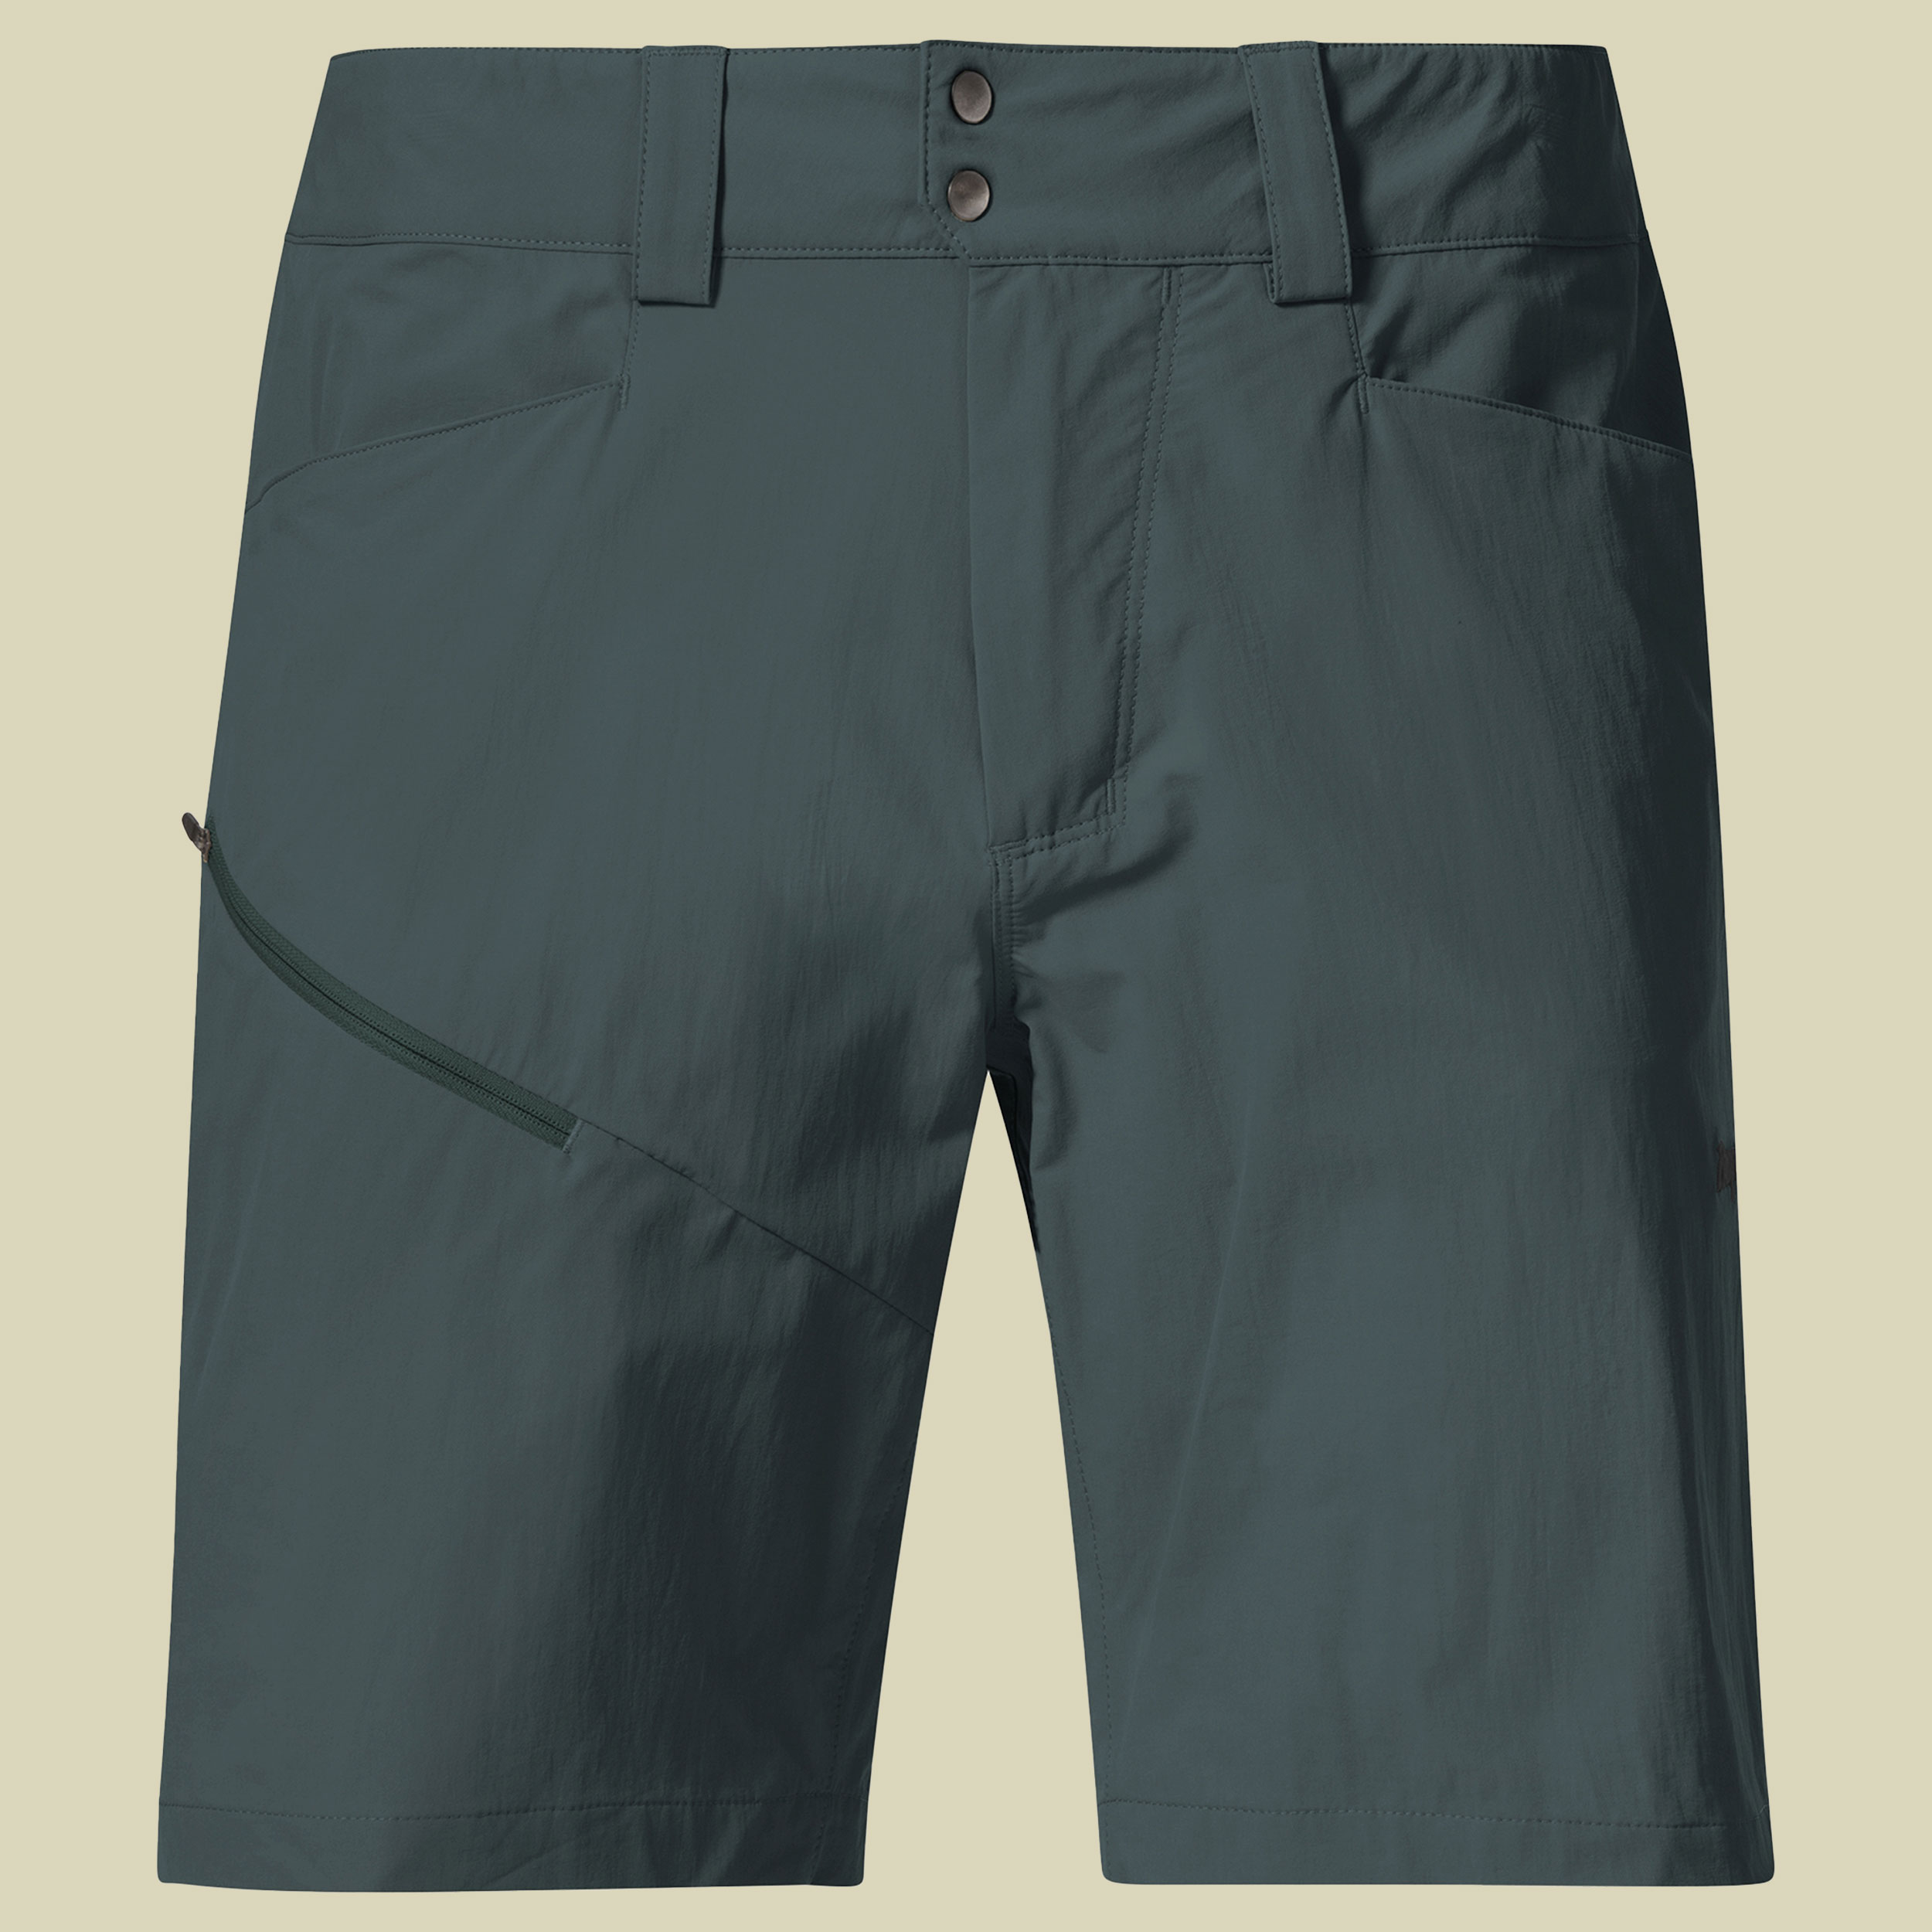 Rabot Light Softshell Shorts Men Größe 54 Farbe duke green